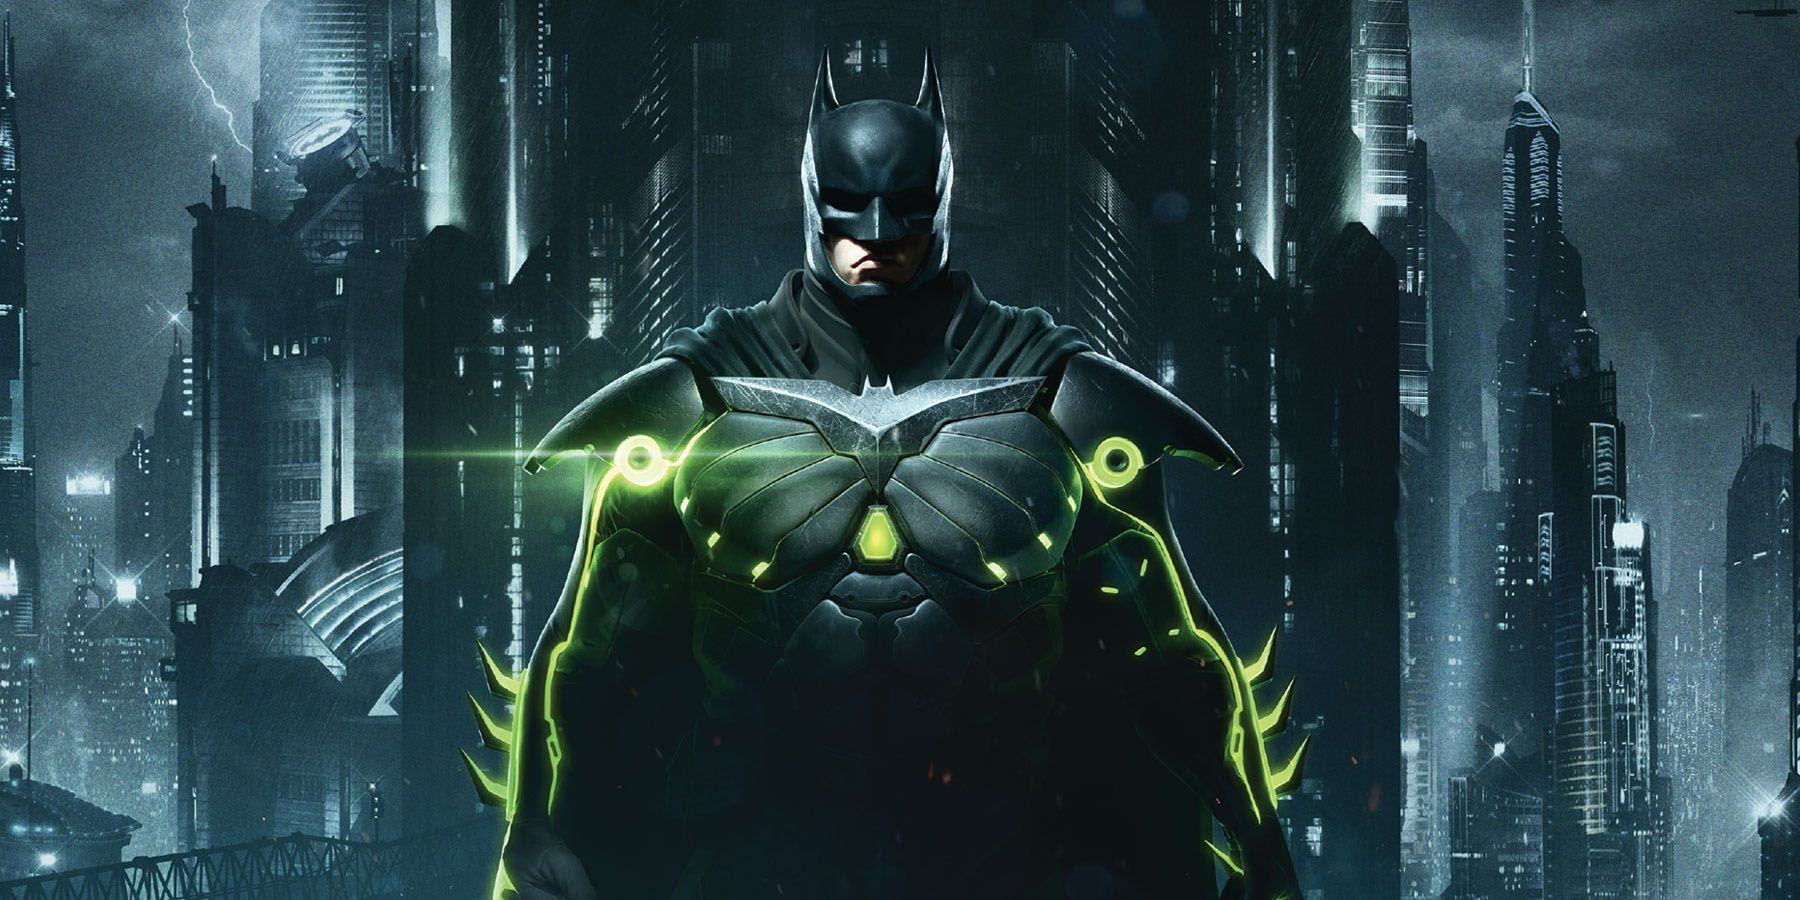 Injustice 2: Best AI Attributes For Batman